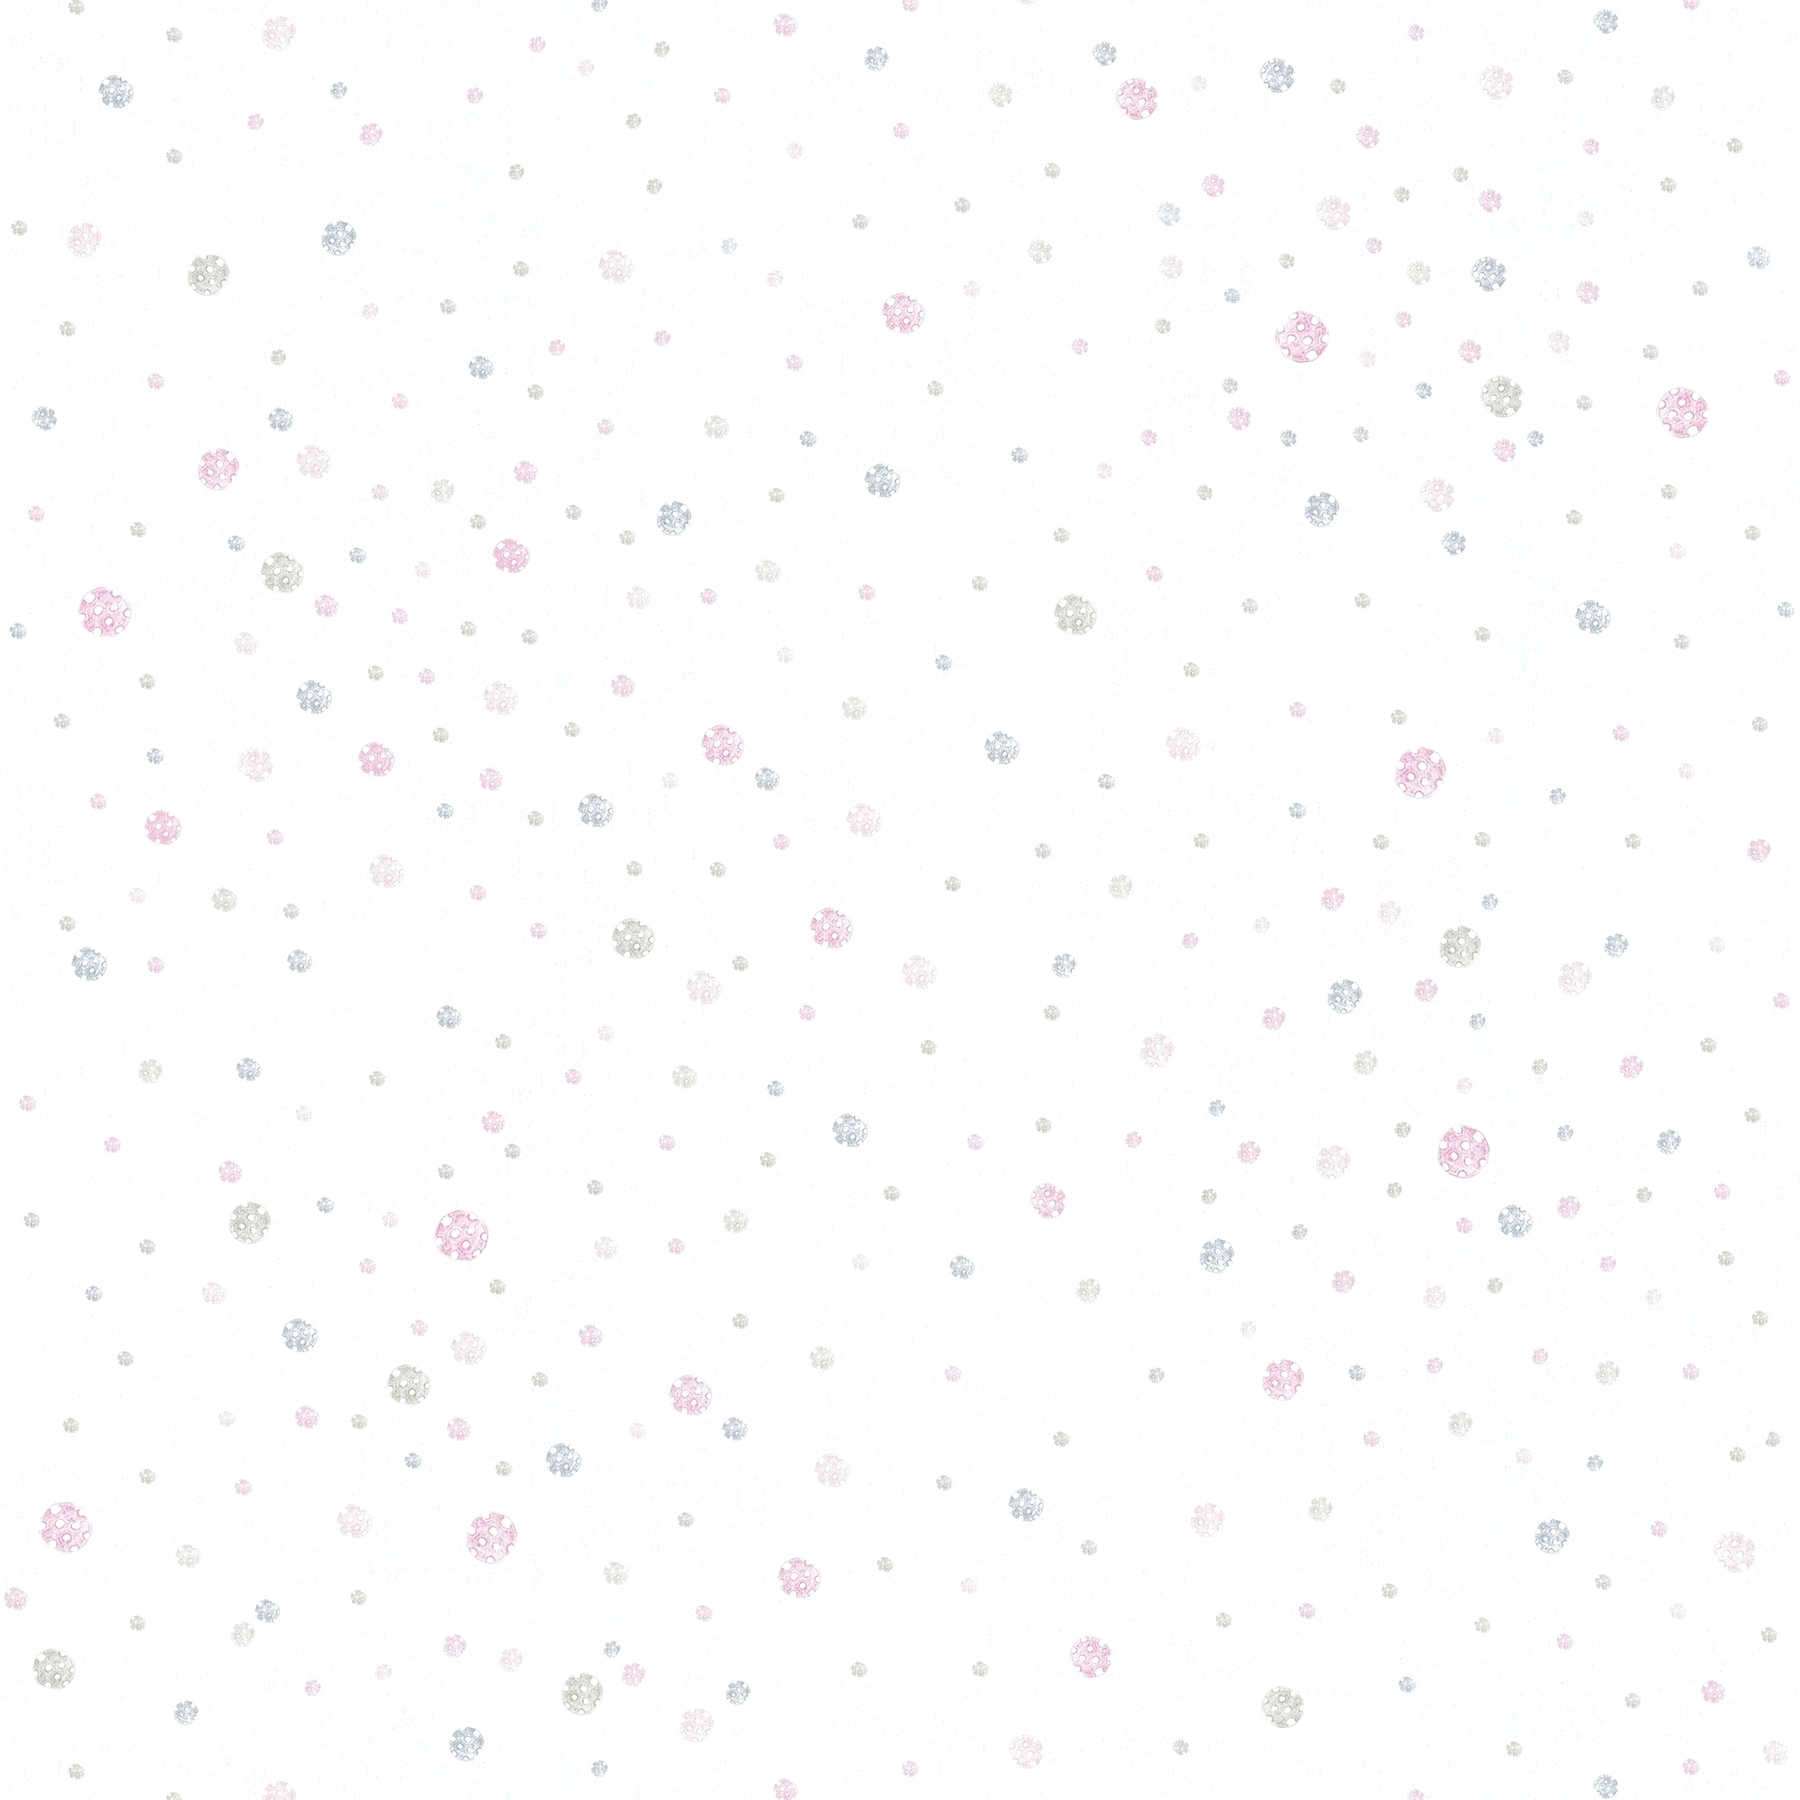         Nursery wallpaper polka dots & dots pattern - Colorful
    